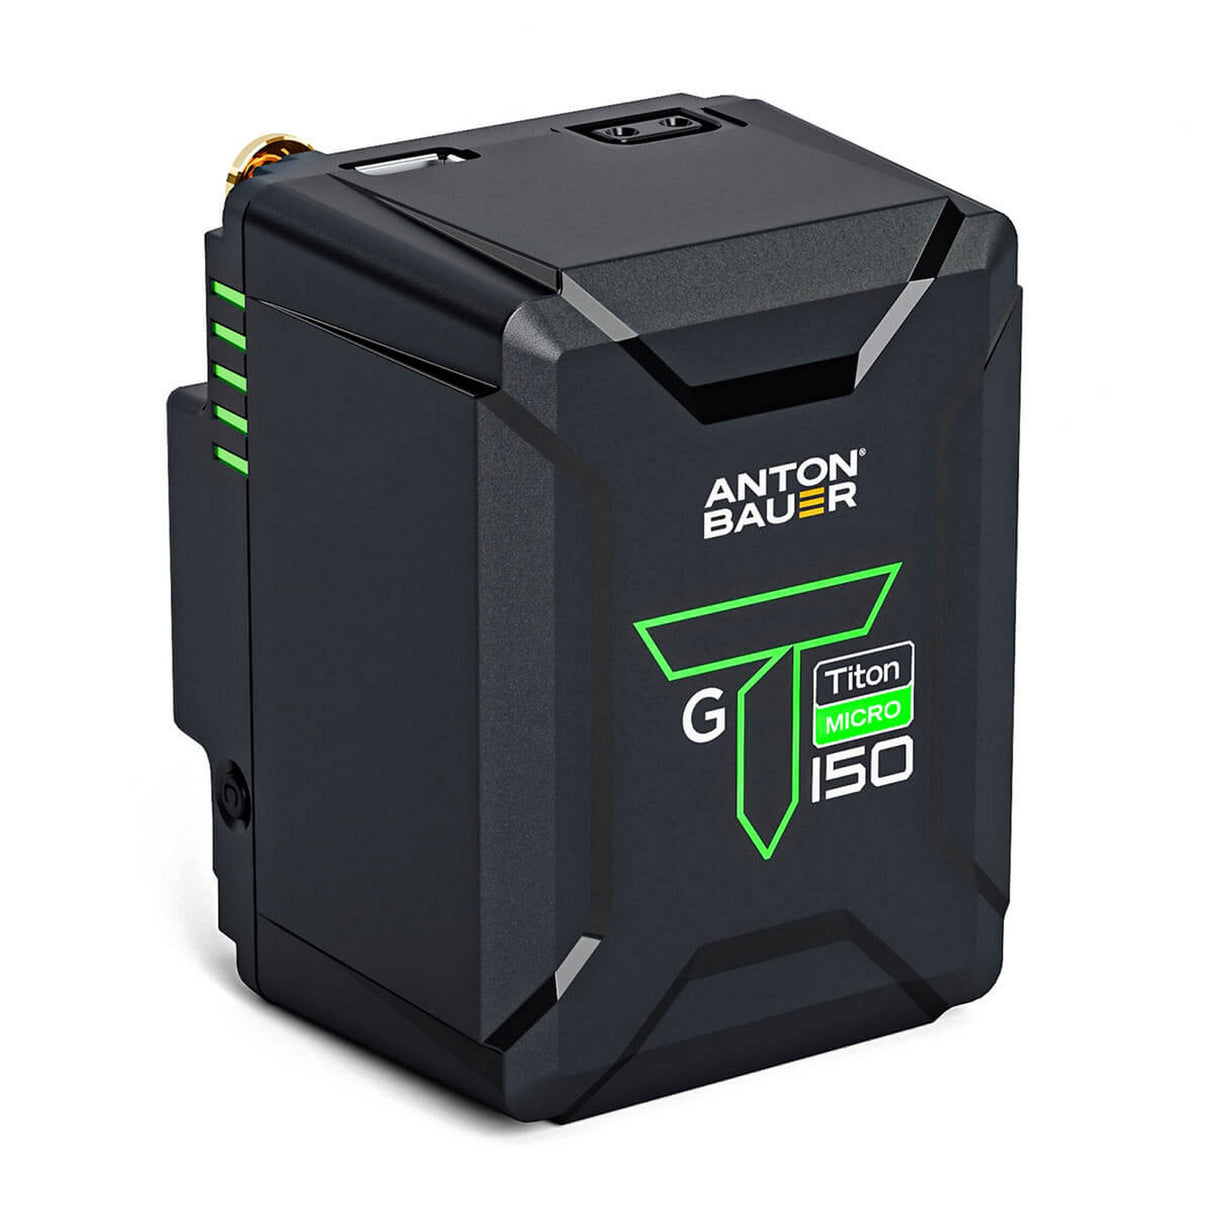 Anton Bauer 8675-0165 Titon Micro 150 Lithium-Ion Gold Mount Battery